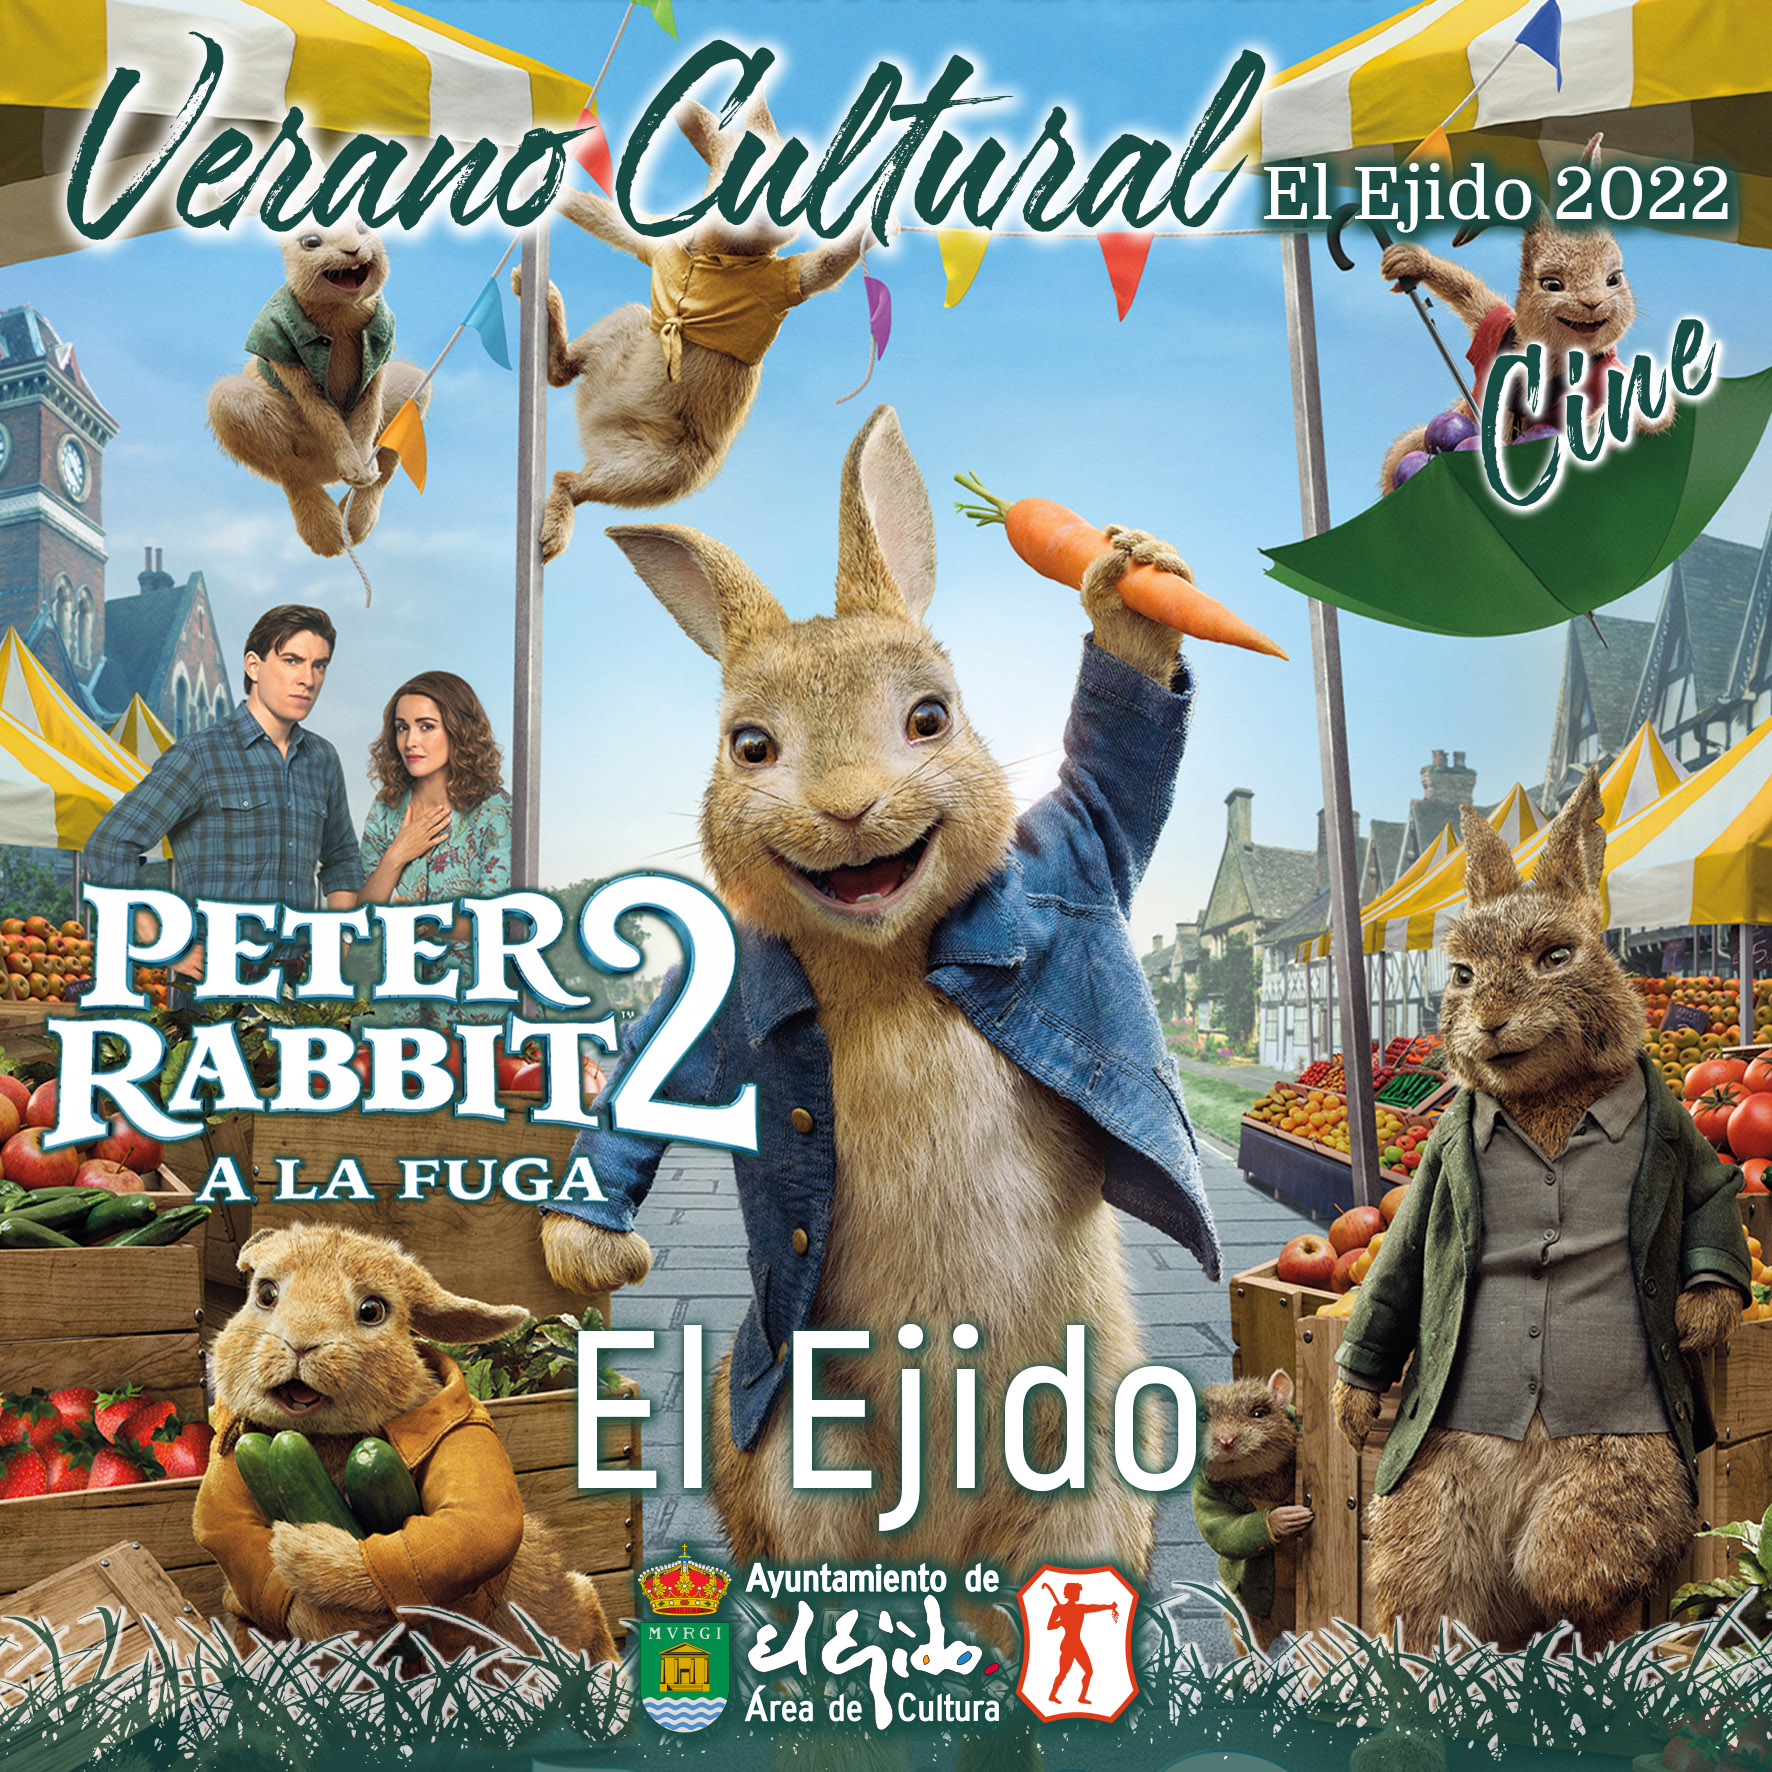 Verano Cultural 2022 de El Ejido – Cine – El Ejido – Peter Rabbit 2 a la fuga